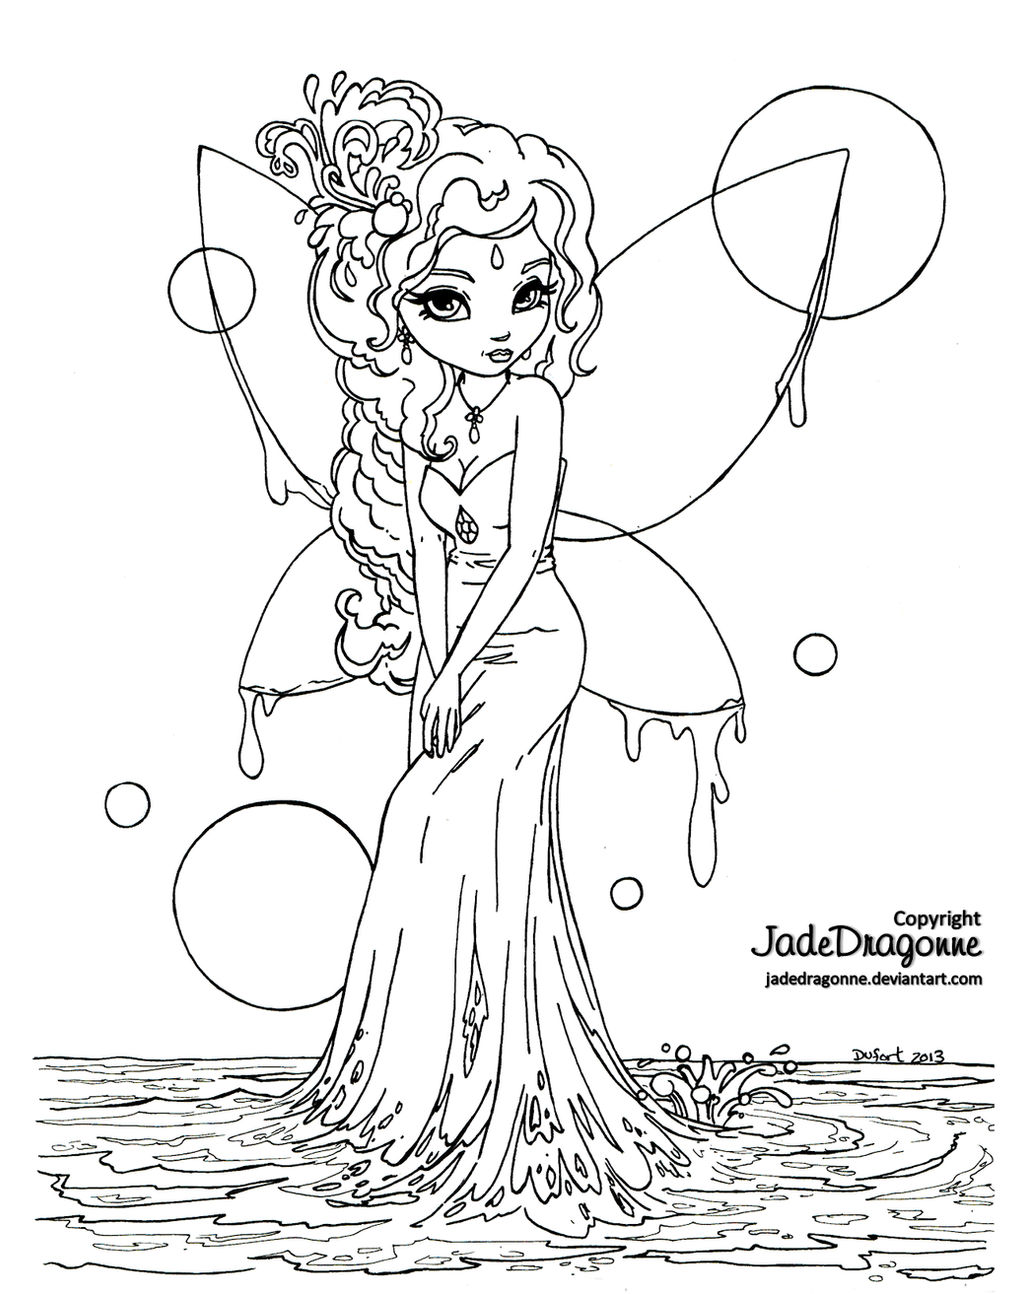 Water Fairy - Lineart